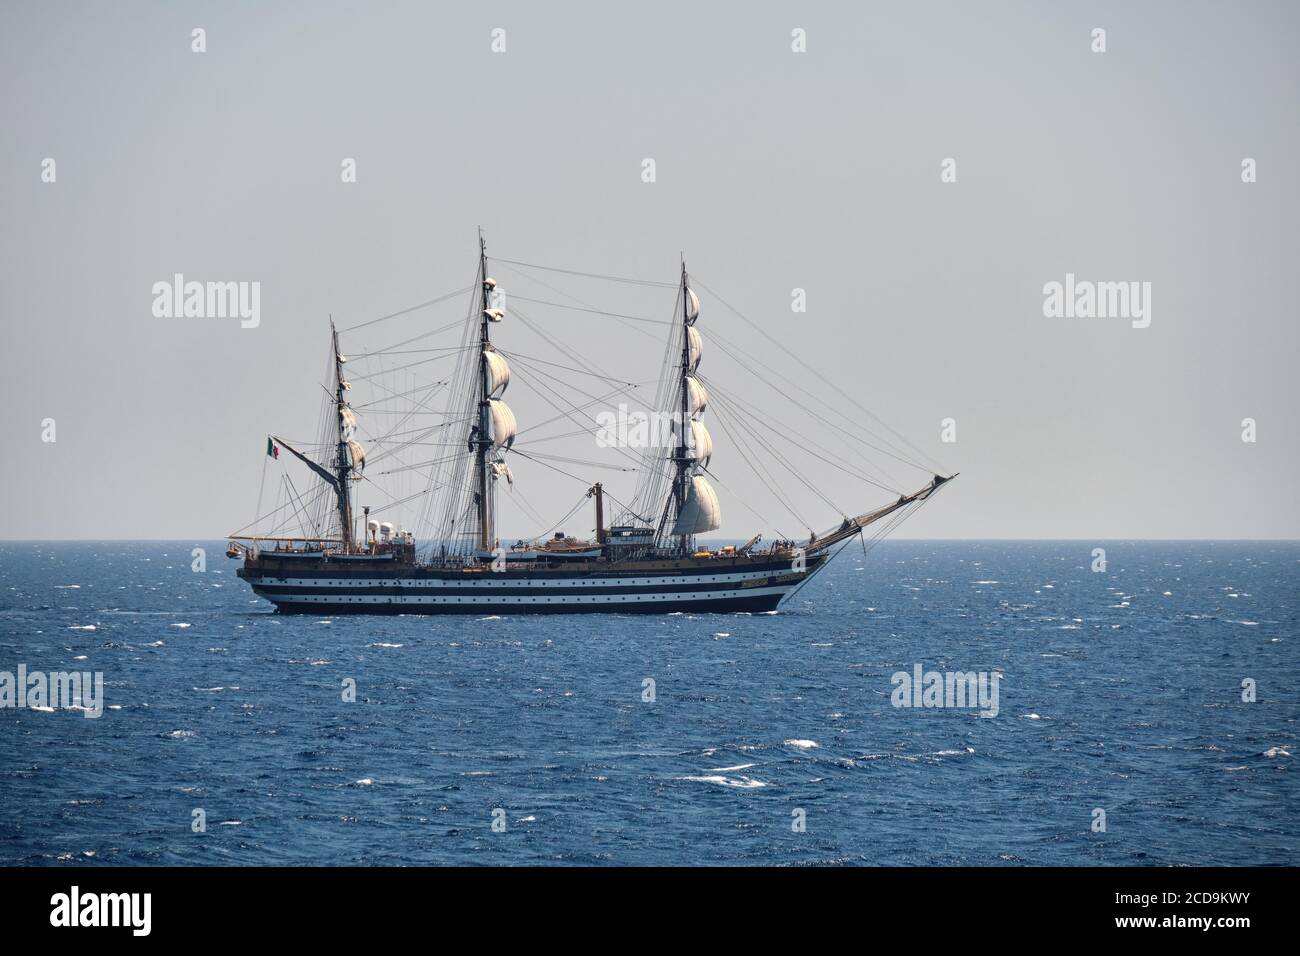 Sicily, Italy - August 12 2020: The Italian navy sail training ship Amerigo Vespucci sailing the Mediterranean Sea Stock Photo